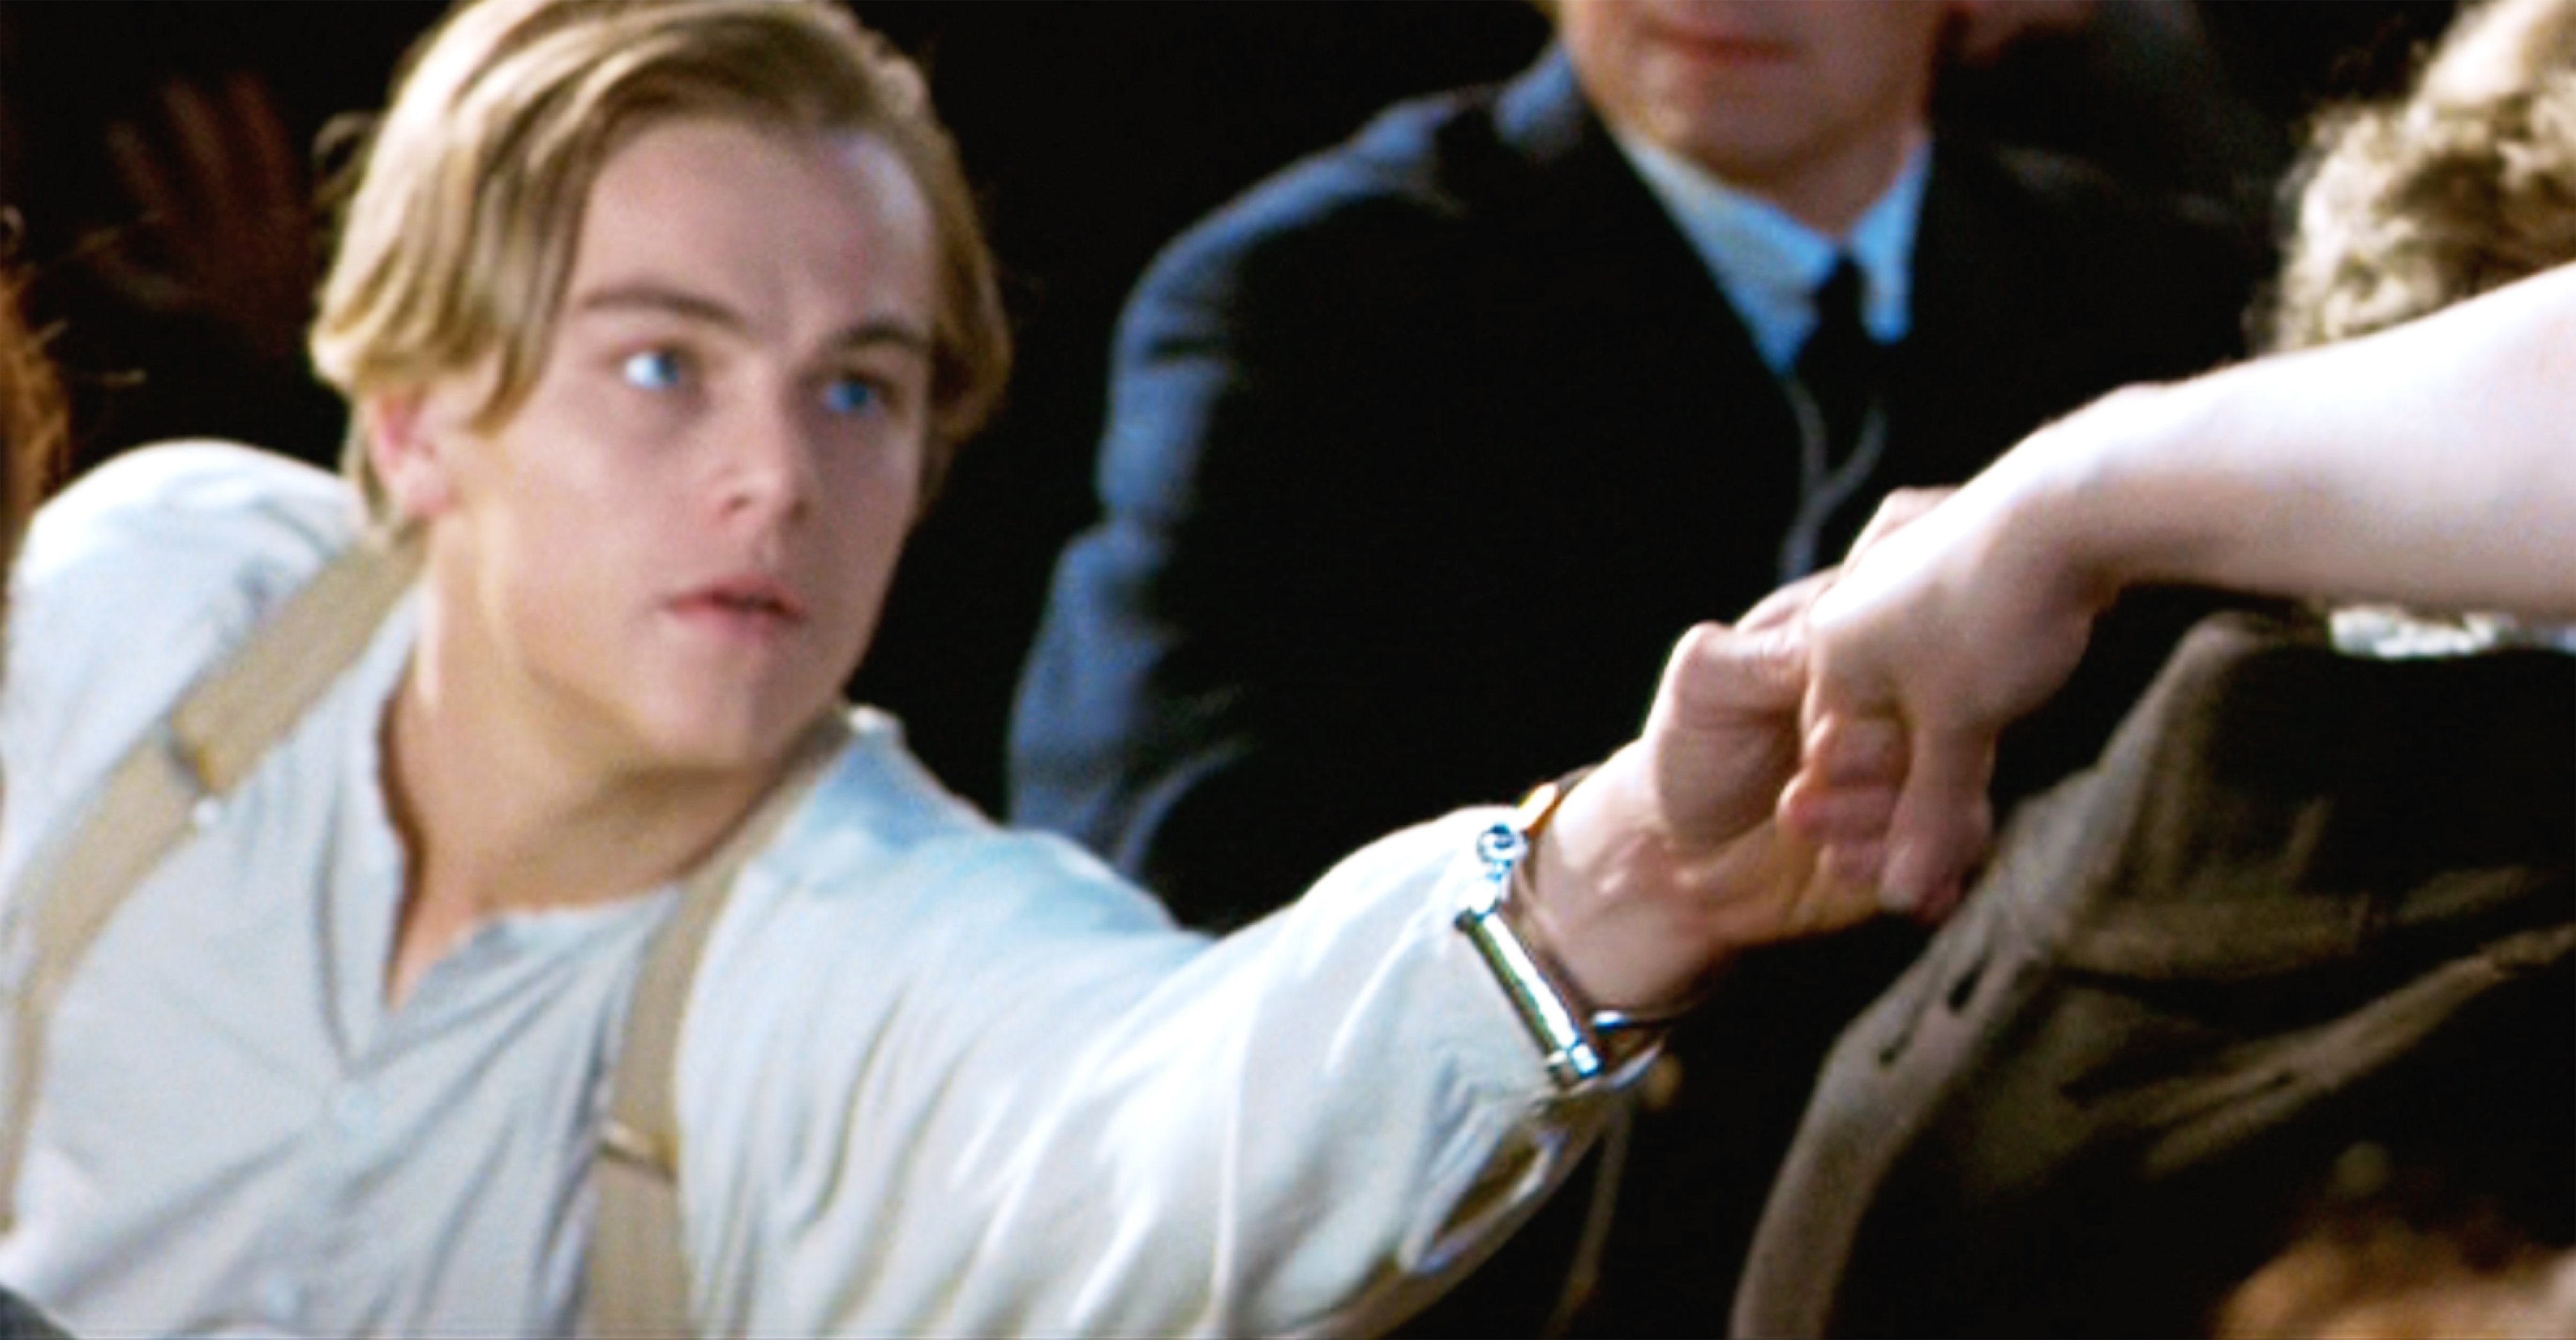 Titanic: Leonardo DiCaprio sends Kate Winslet into a life boat